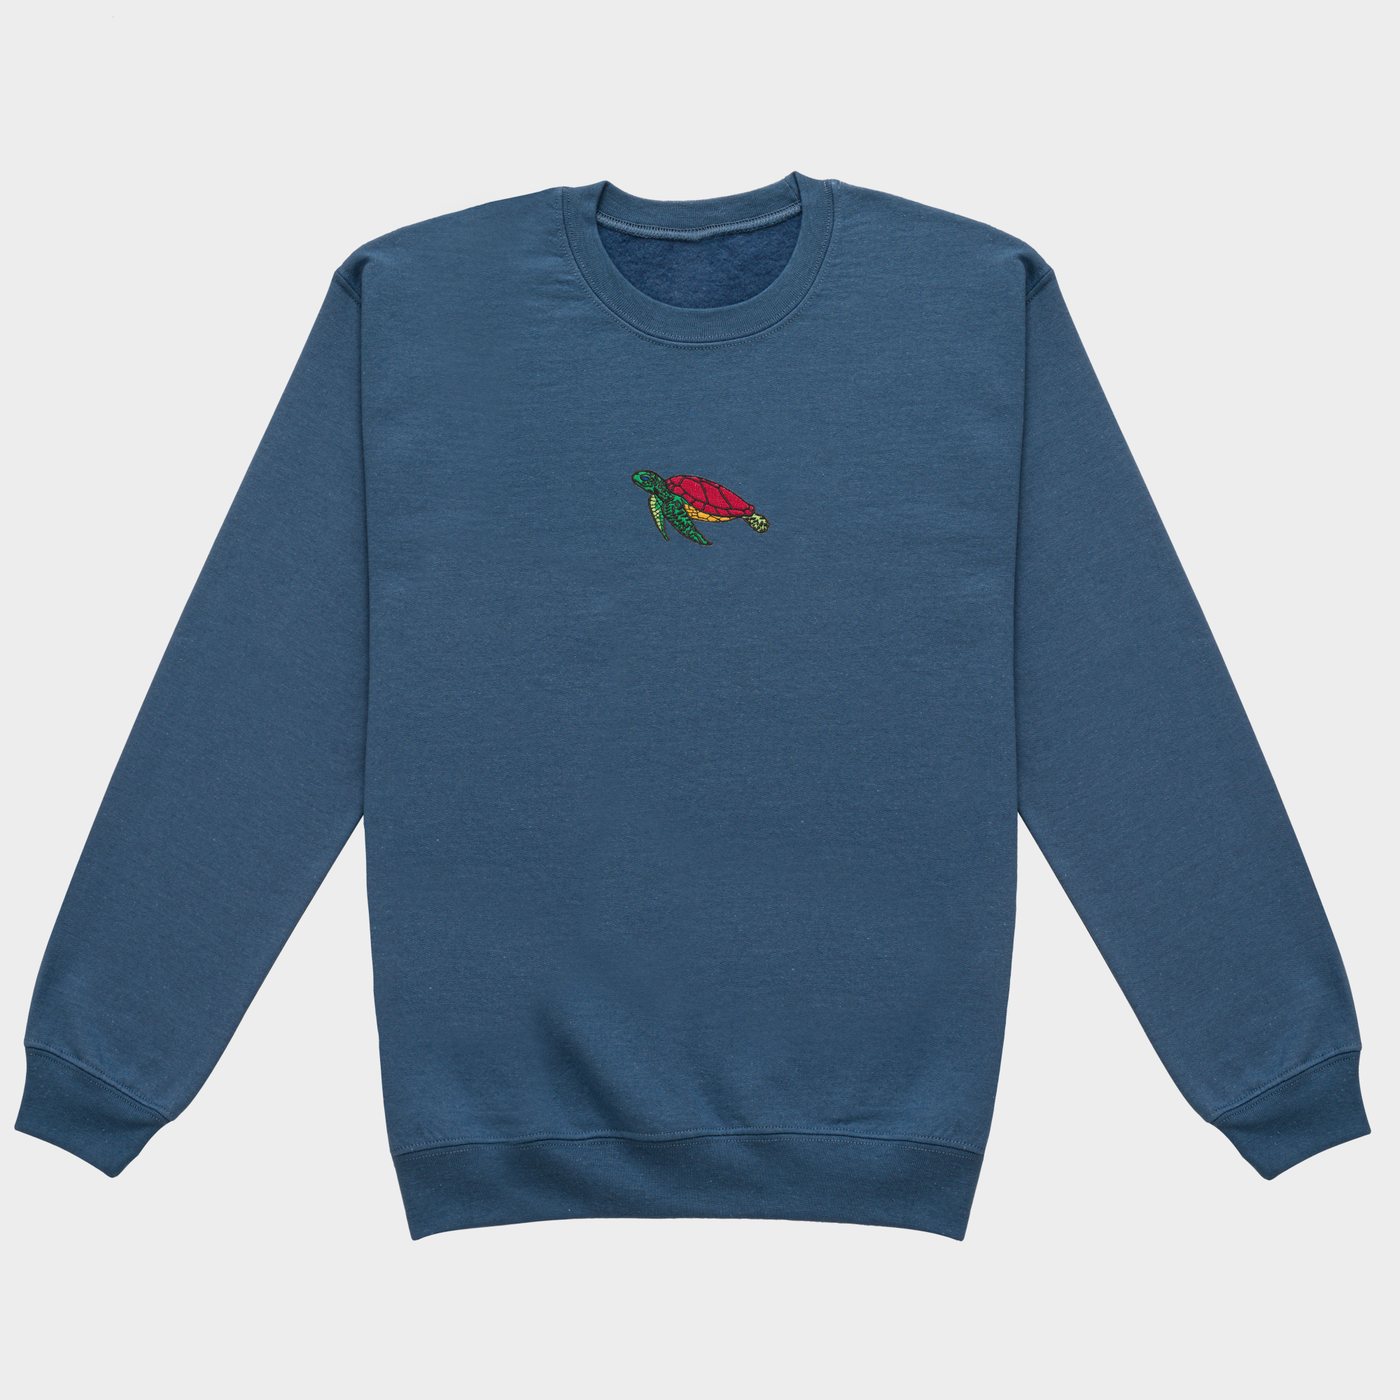 Bobby's Planet Men's Embroidered Sea Turtle Sweatshirt from Seven Seas Fish Animals Collection in Indigo Blue Color#color_indigo-blue